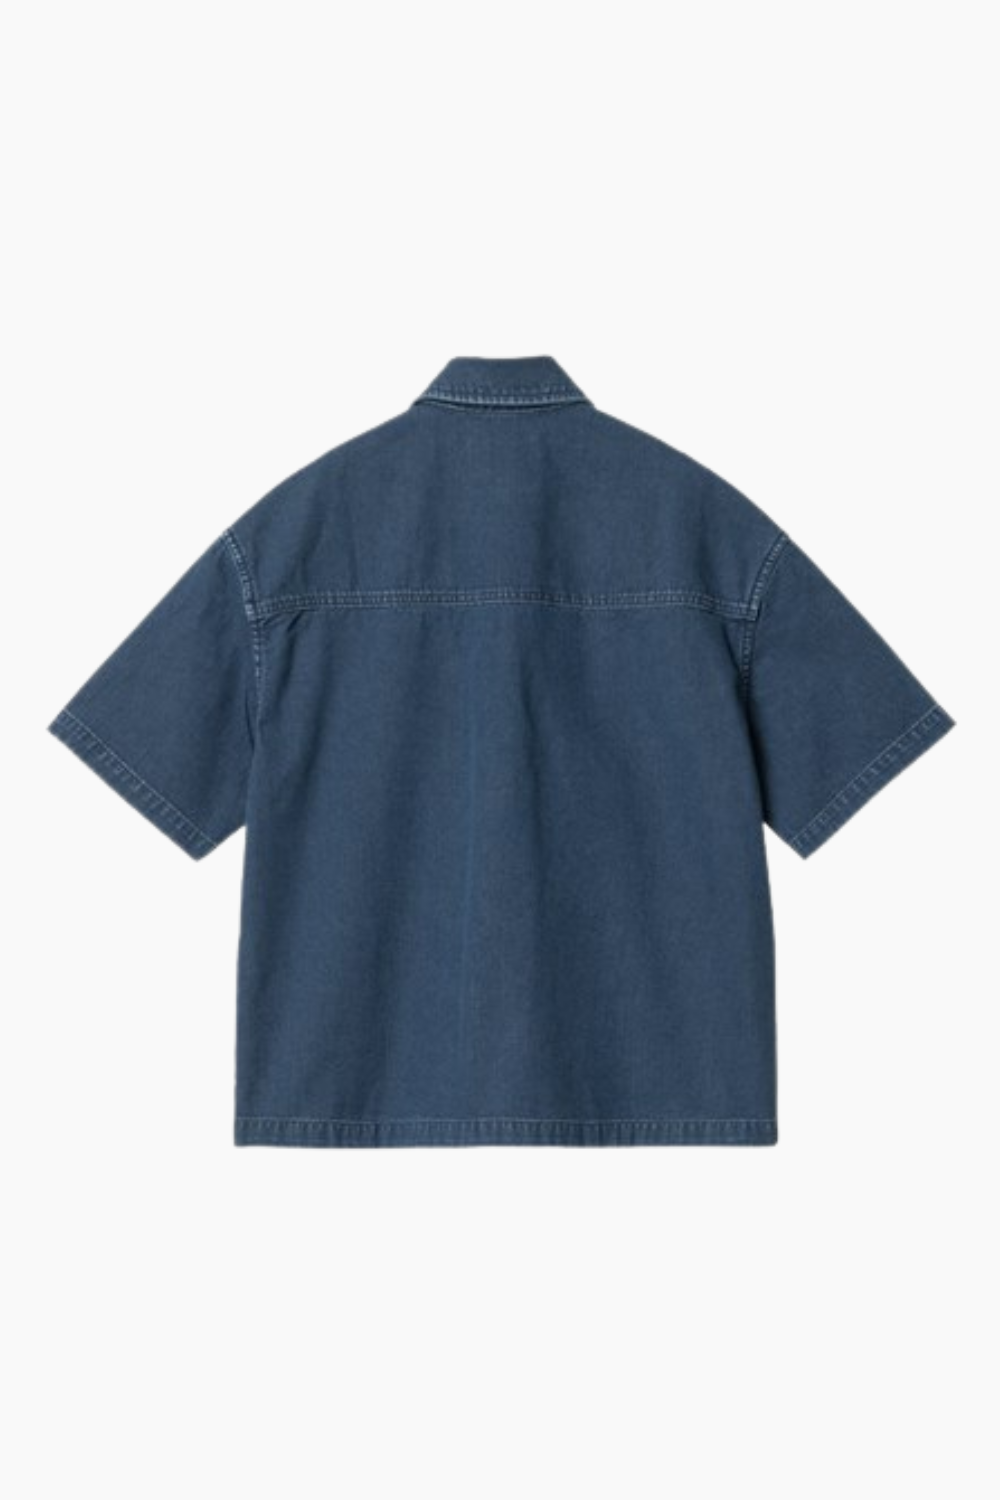 W' S/S Lovilia Shirt - Blue Heavy Stone Wash - Carhartt WIP